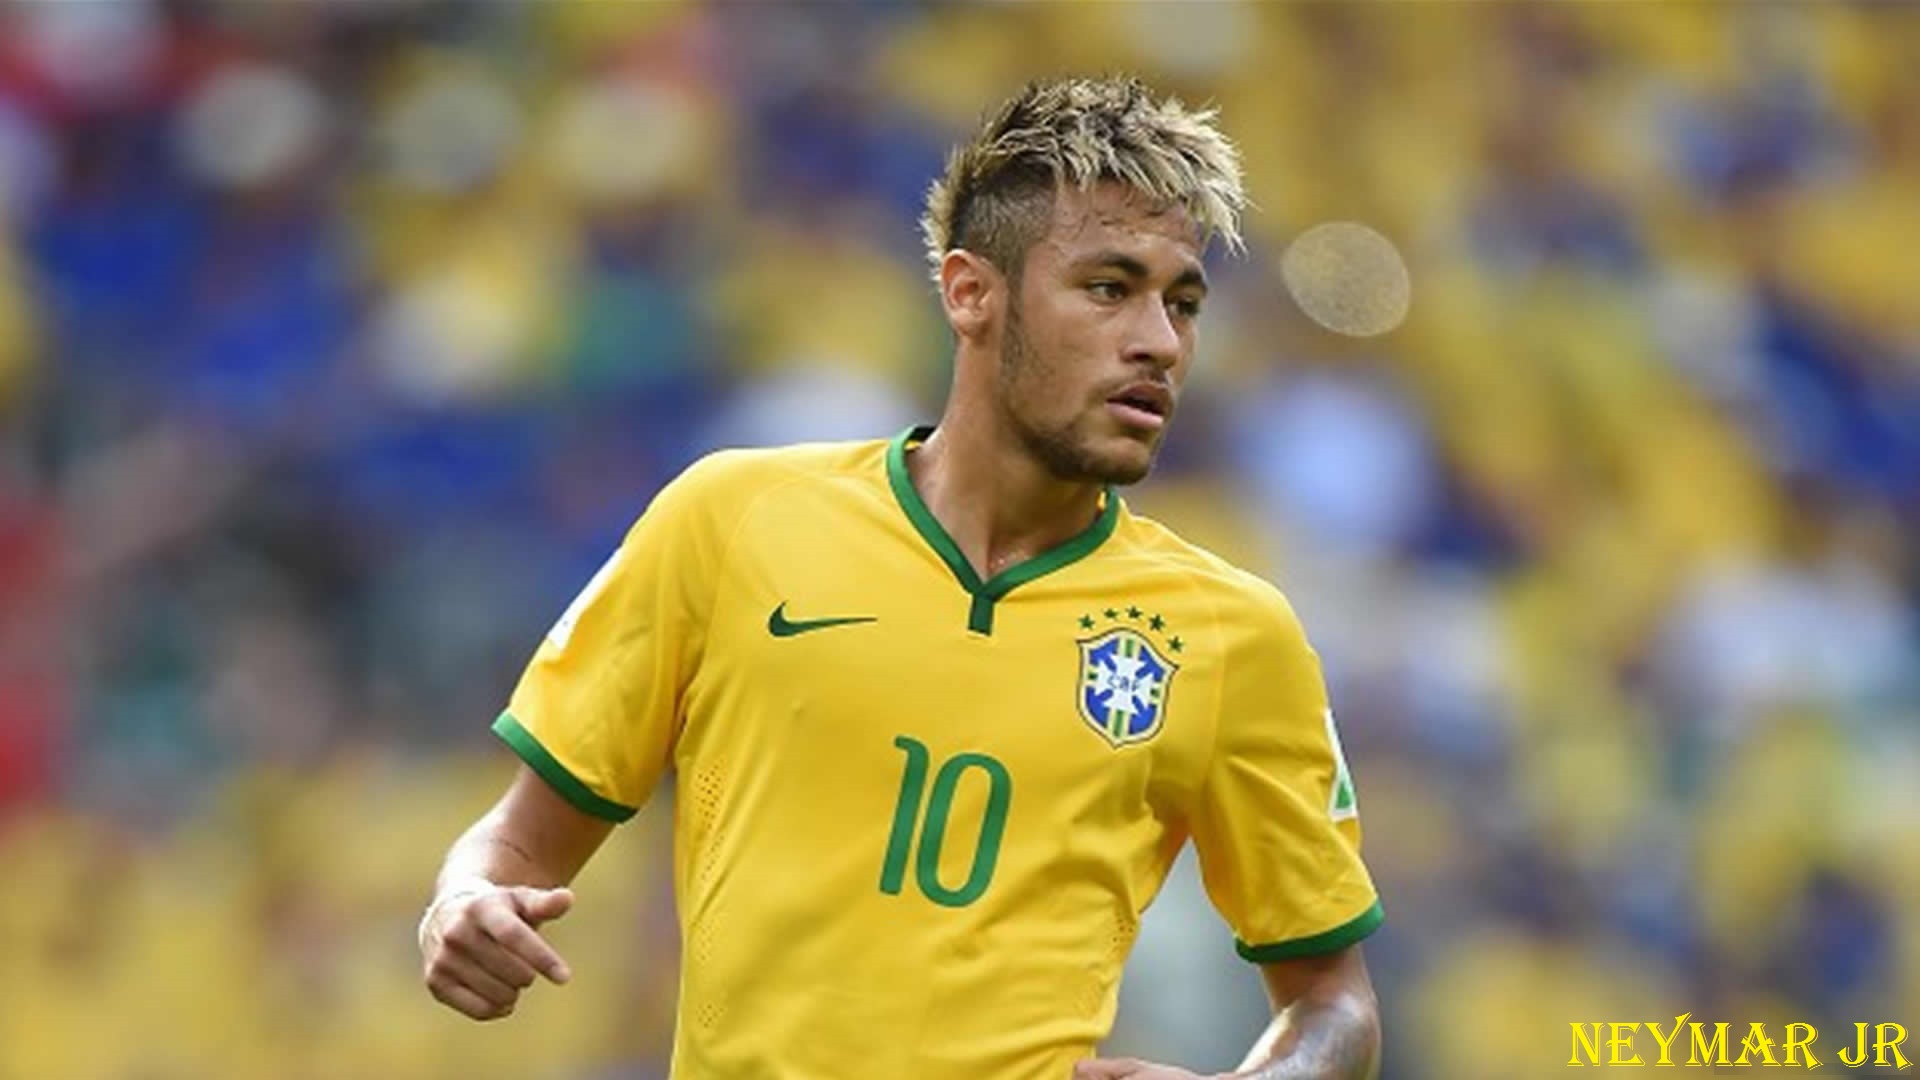 Neymar-Brazil-wallpaper-2017-free-download